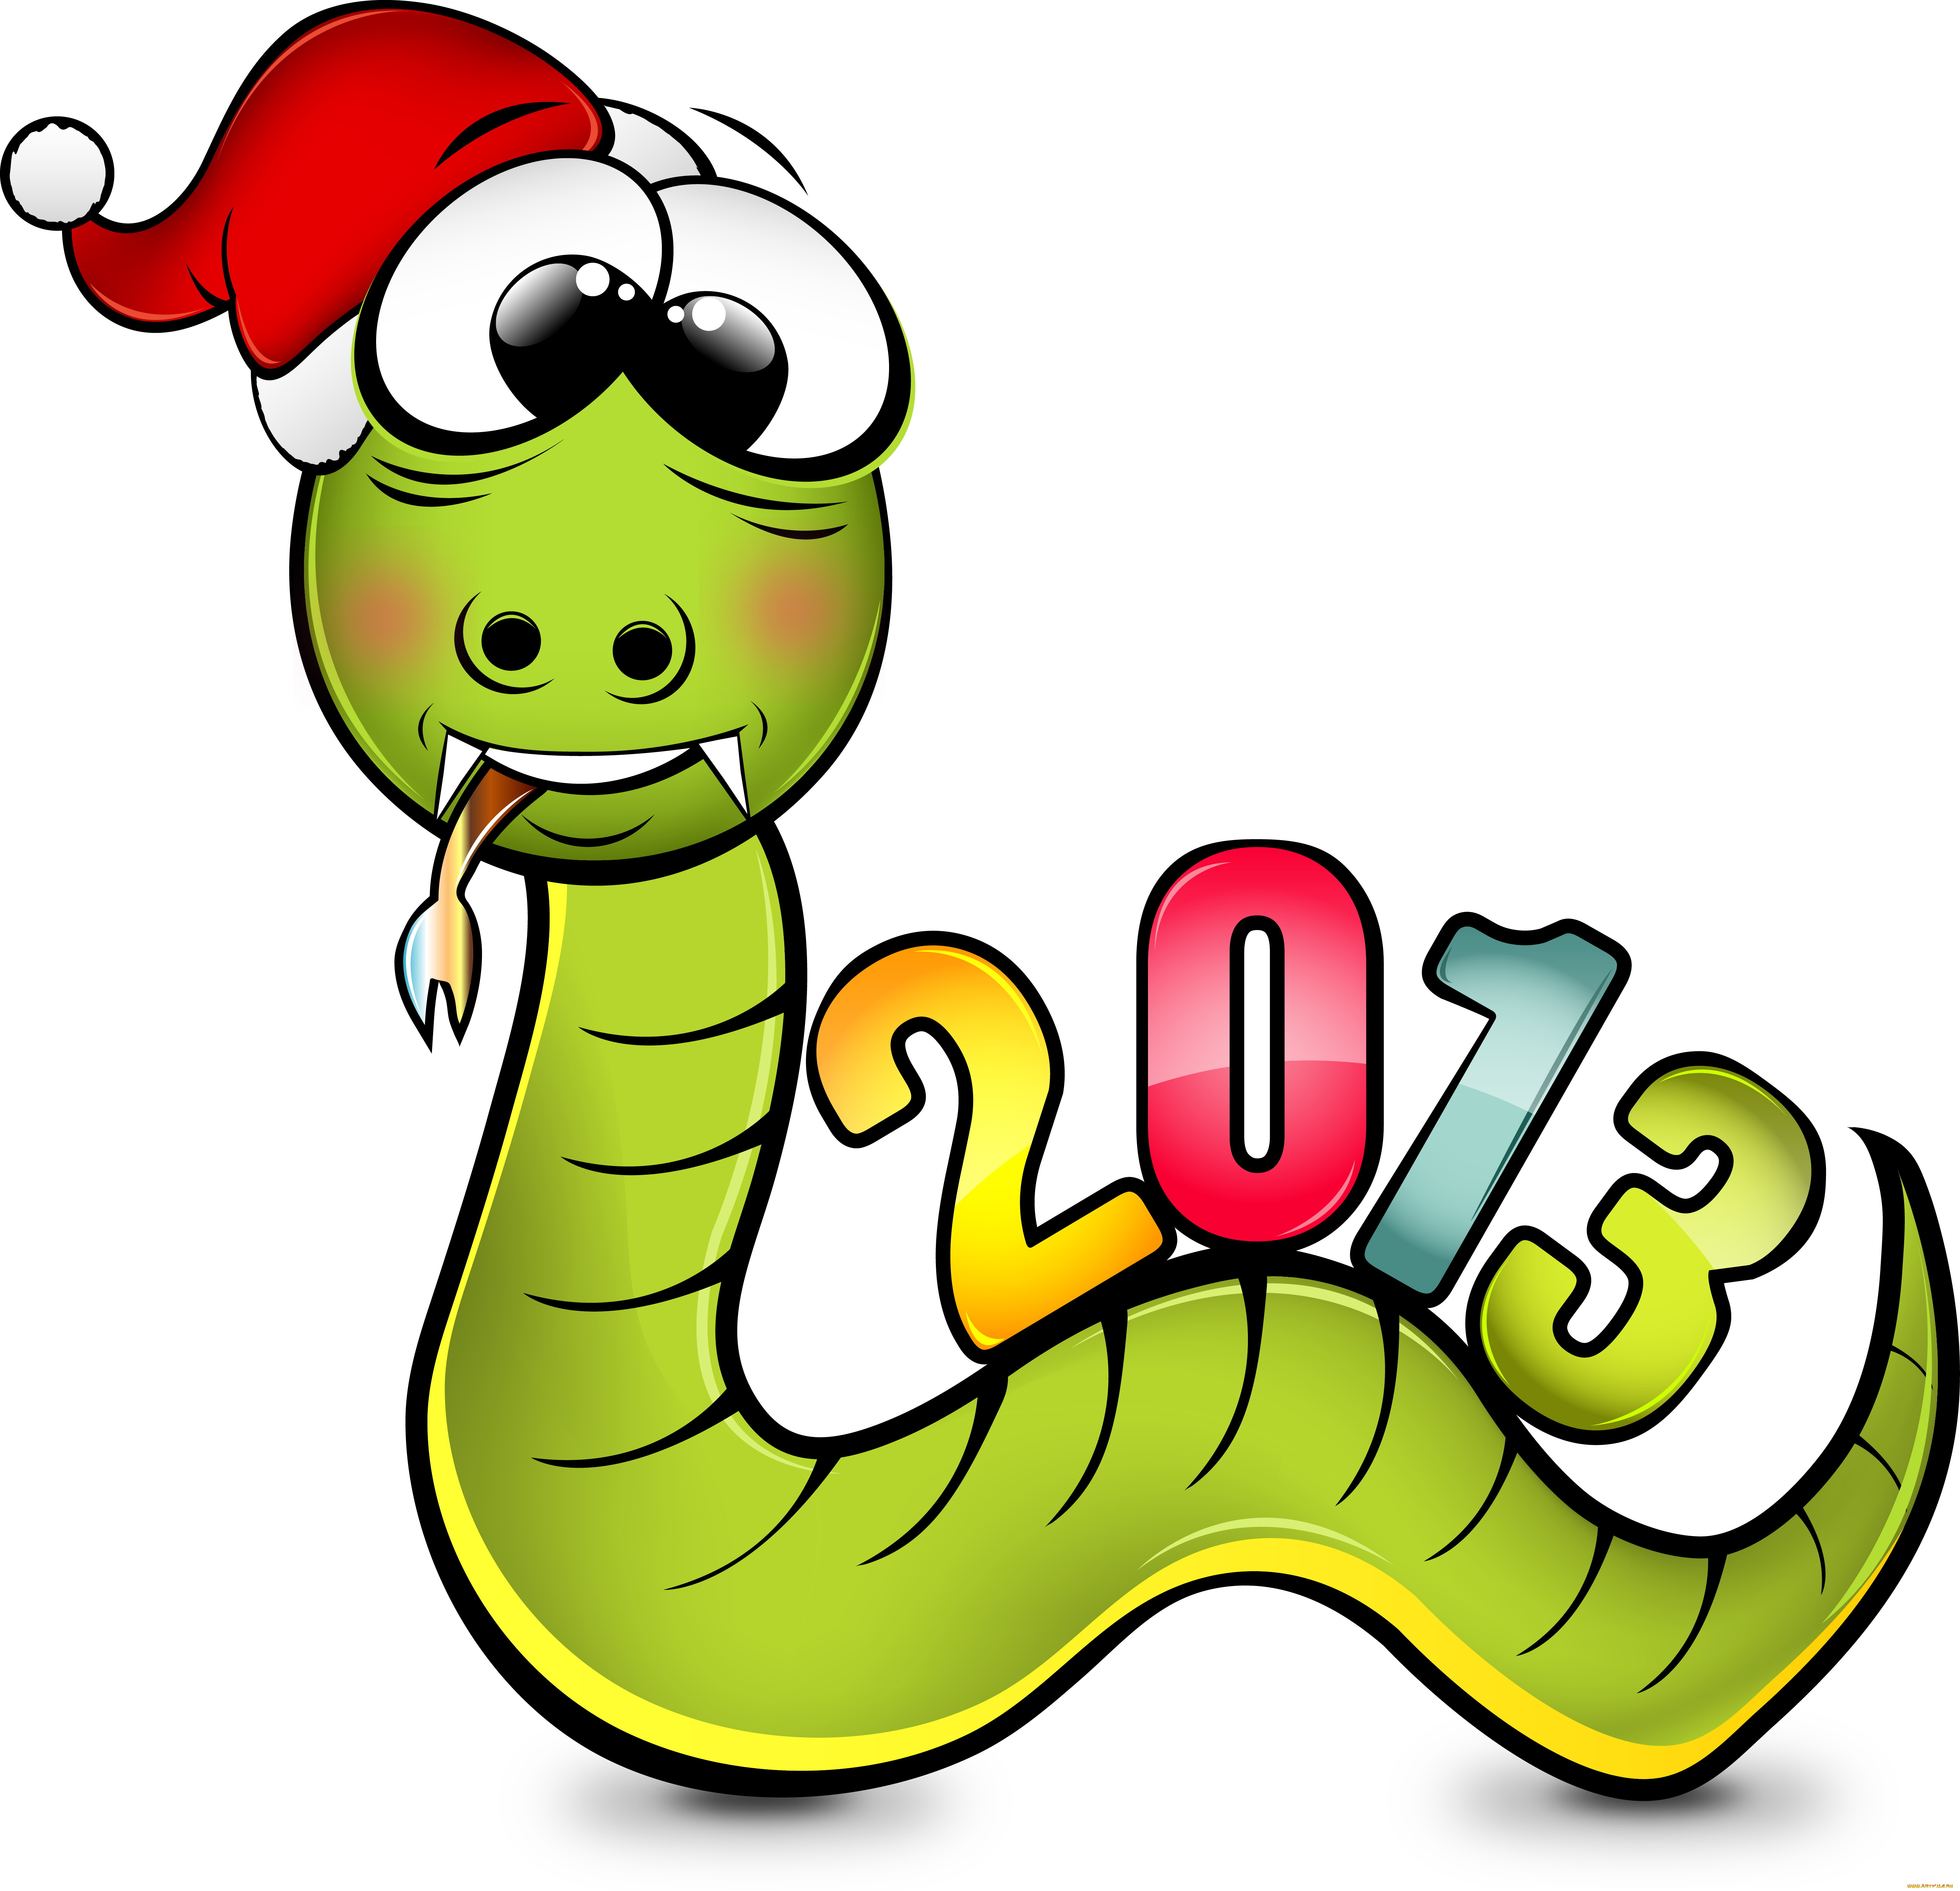 2013 какой змеи. 2013 Год змеи. Год змеи символ. Змея картинка. Символ года змея.